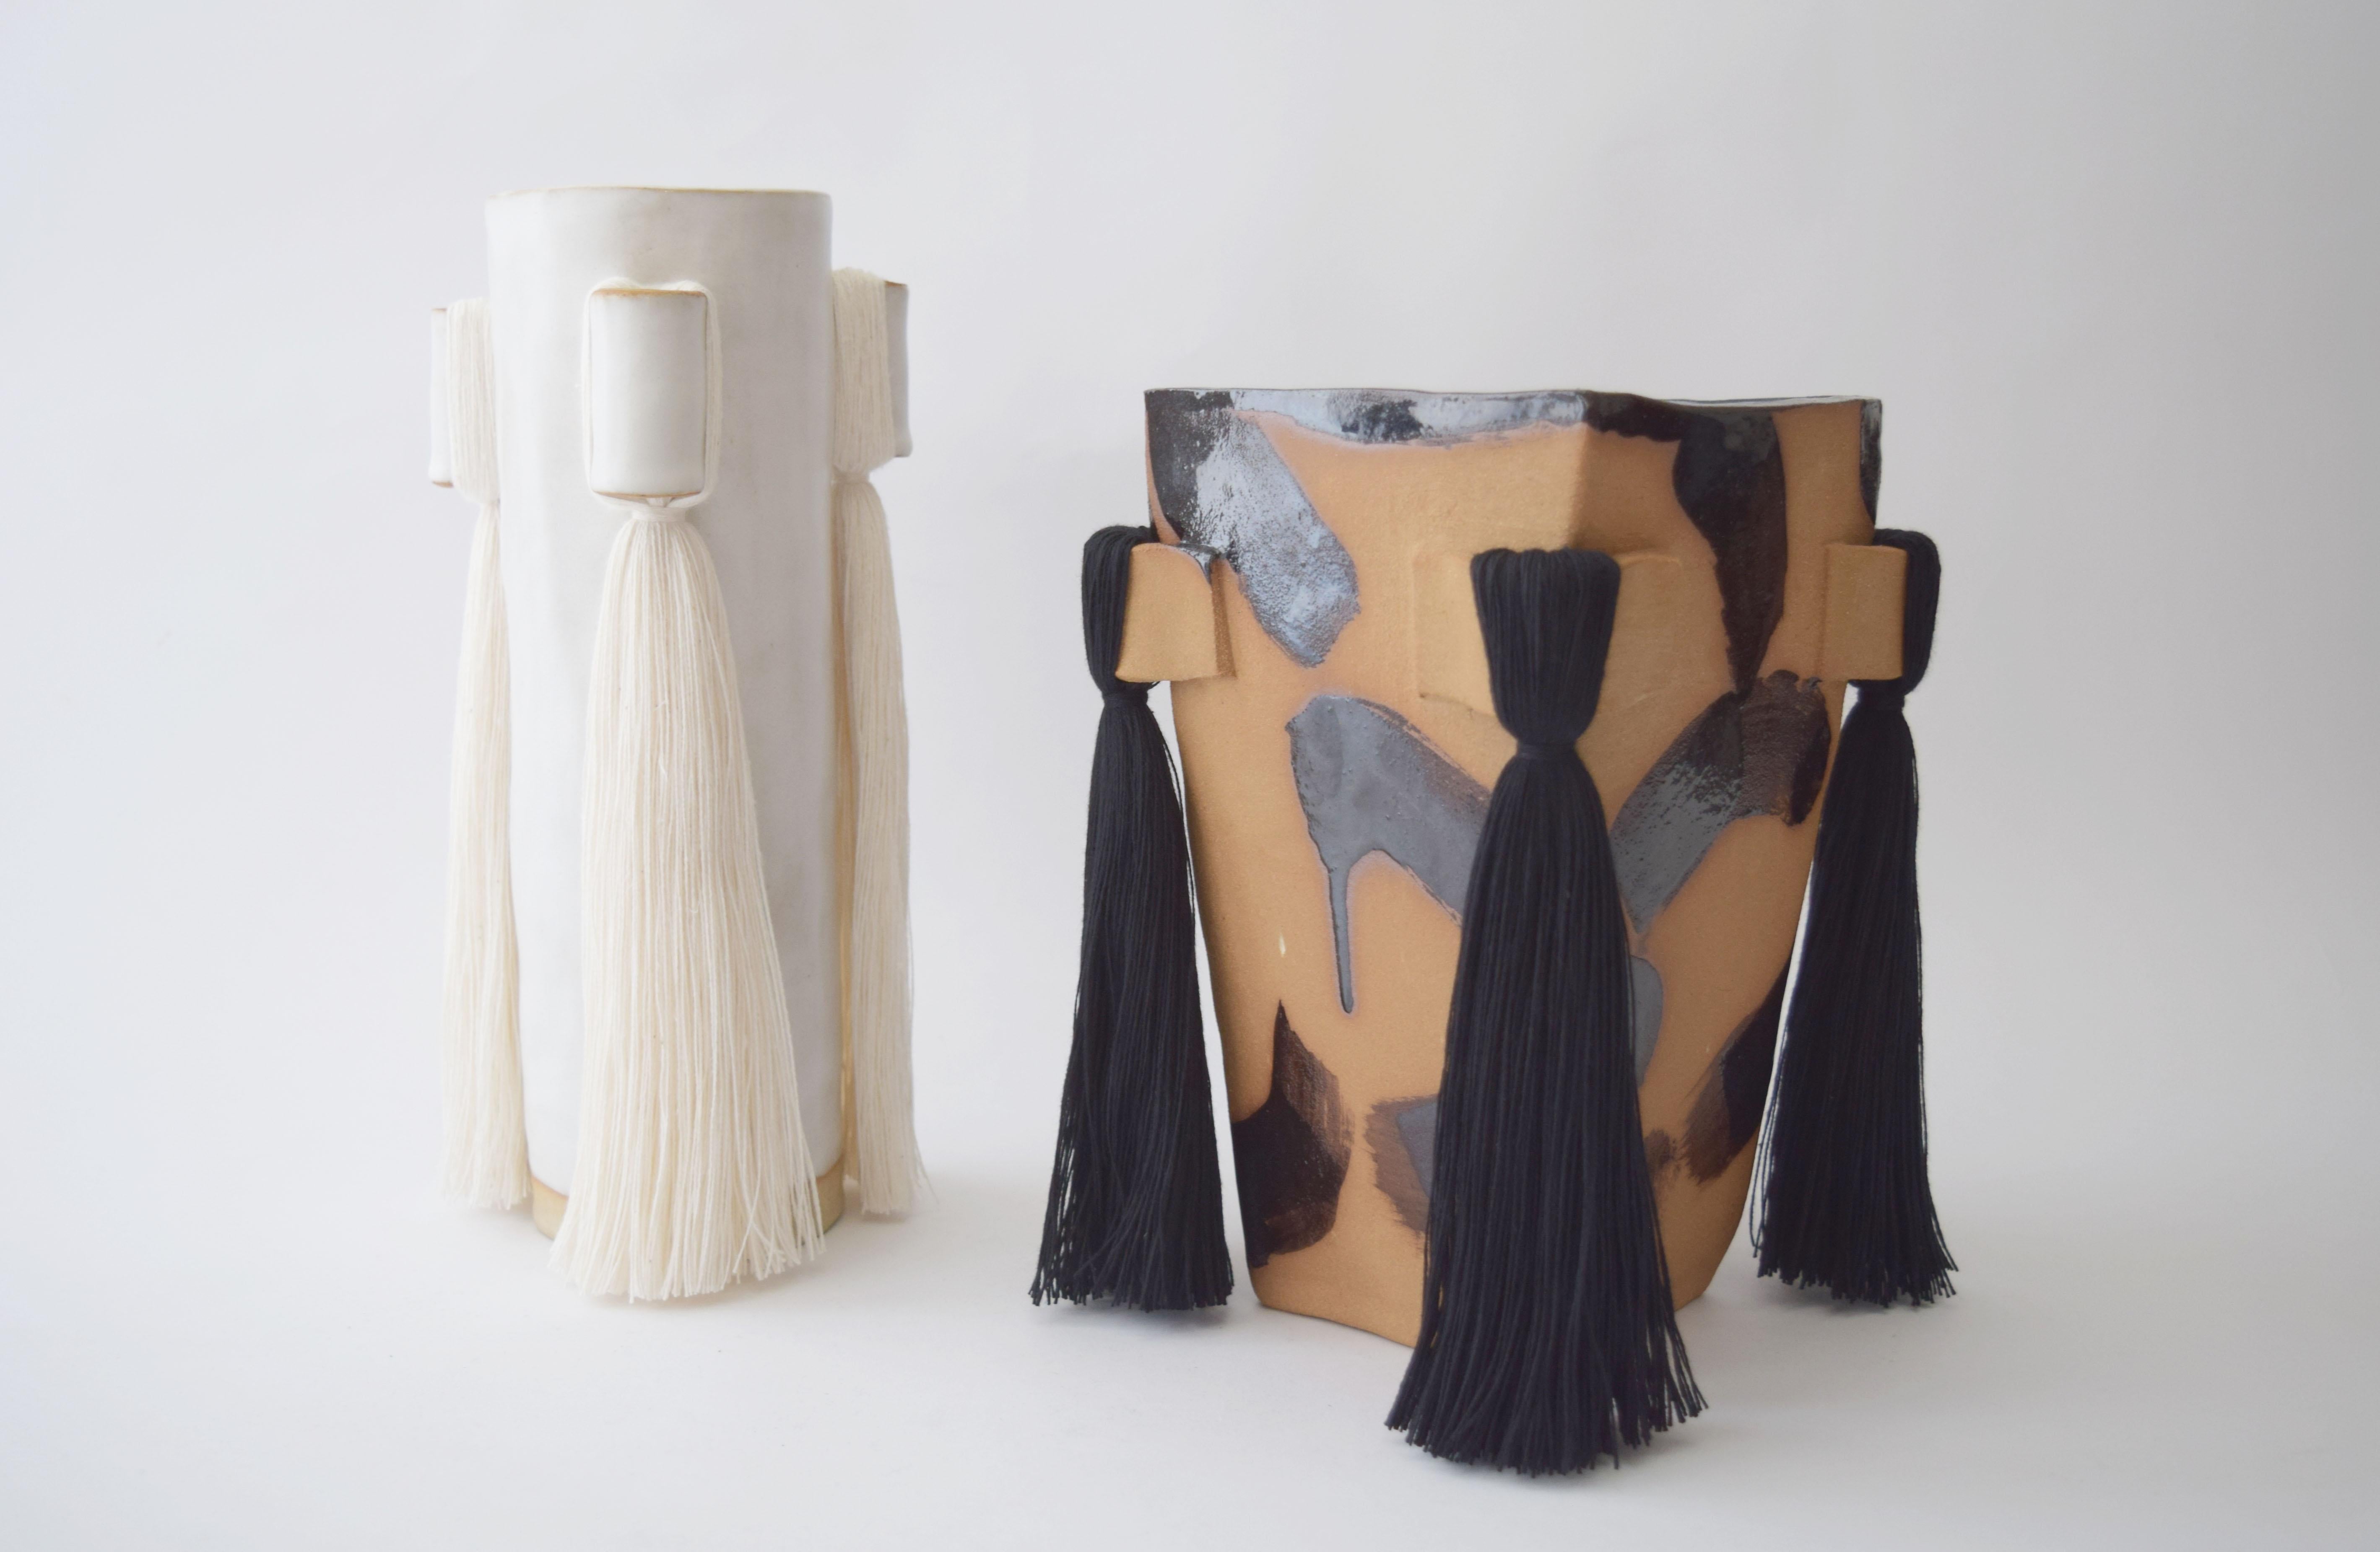 Hand-Crafted Handmade Ceramic Vase with Black Brushstrokes, Black Cotton Fringe